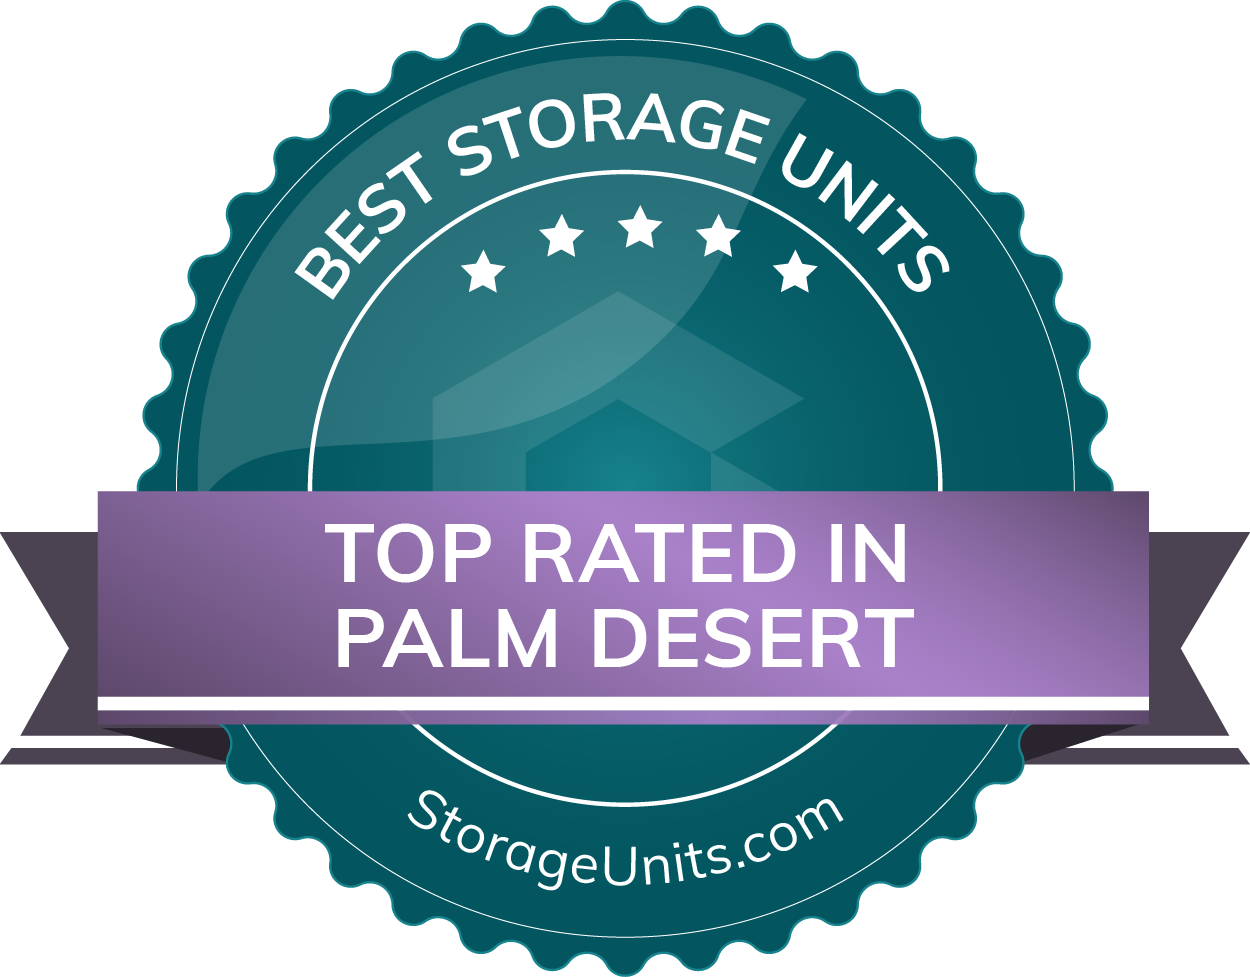 Best Self Storage Units in Palm Desert, California of 2022